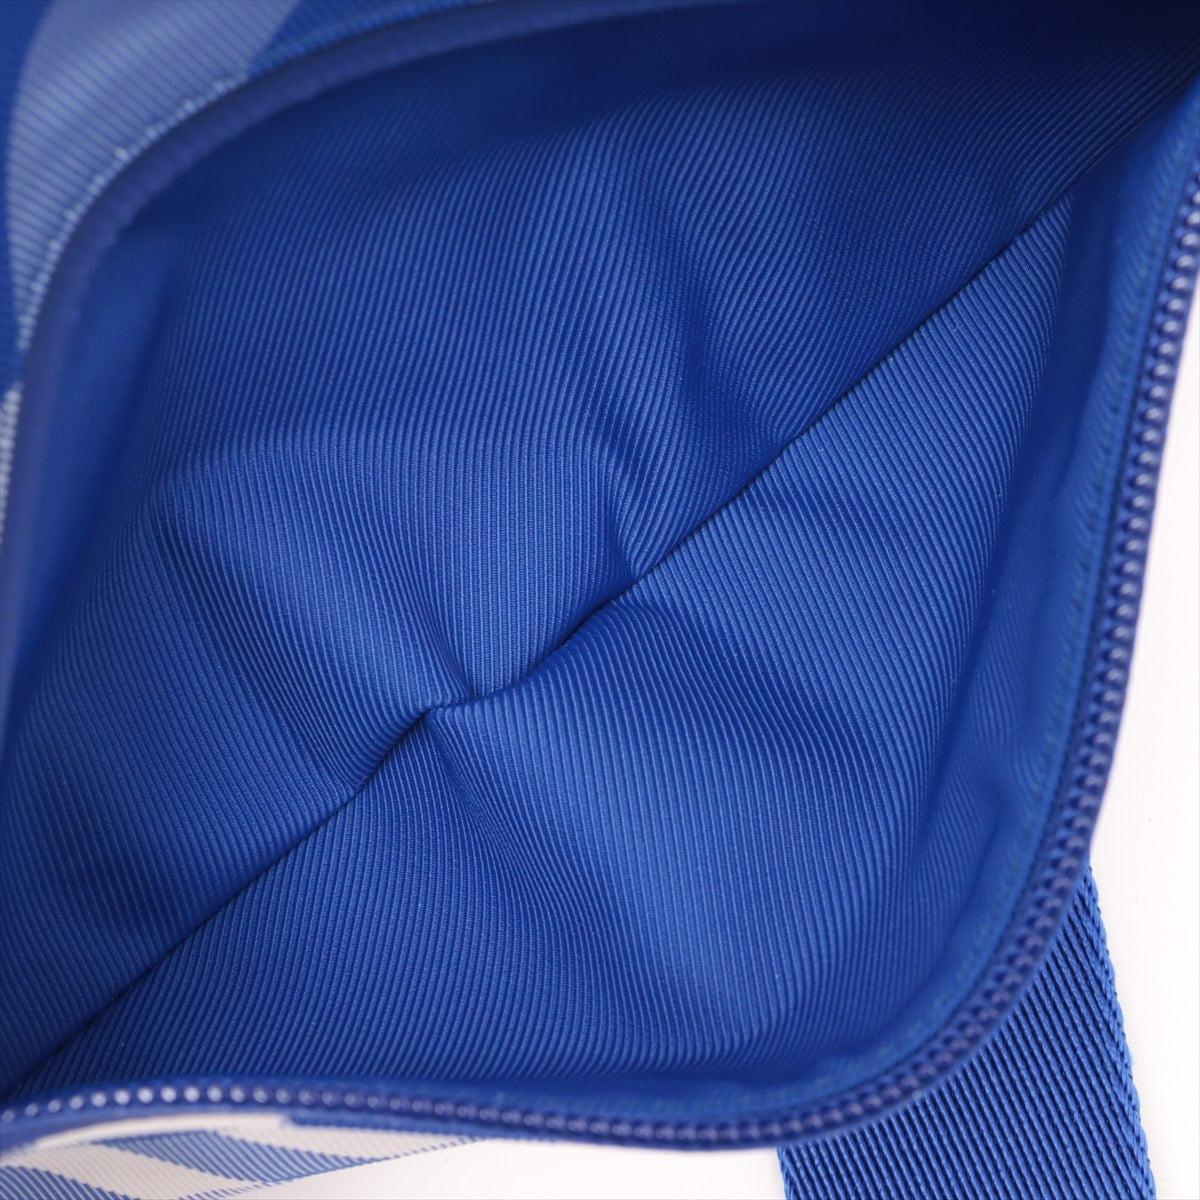 Burberry Nylon Body Bag Blue